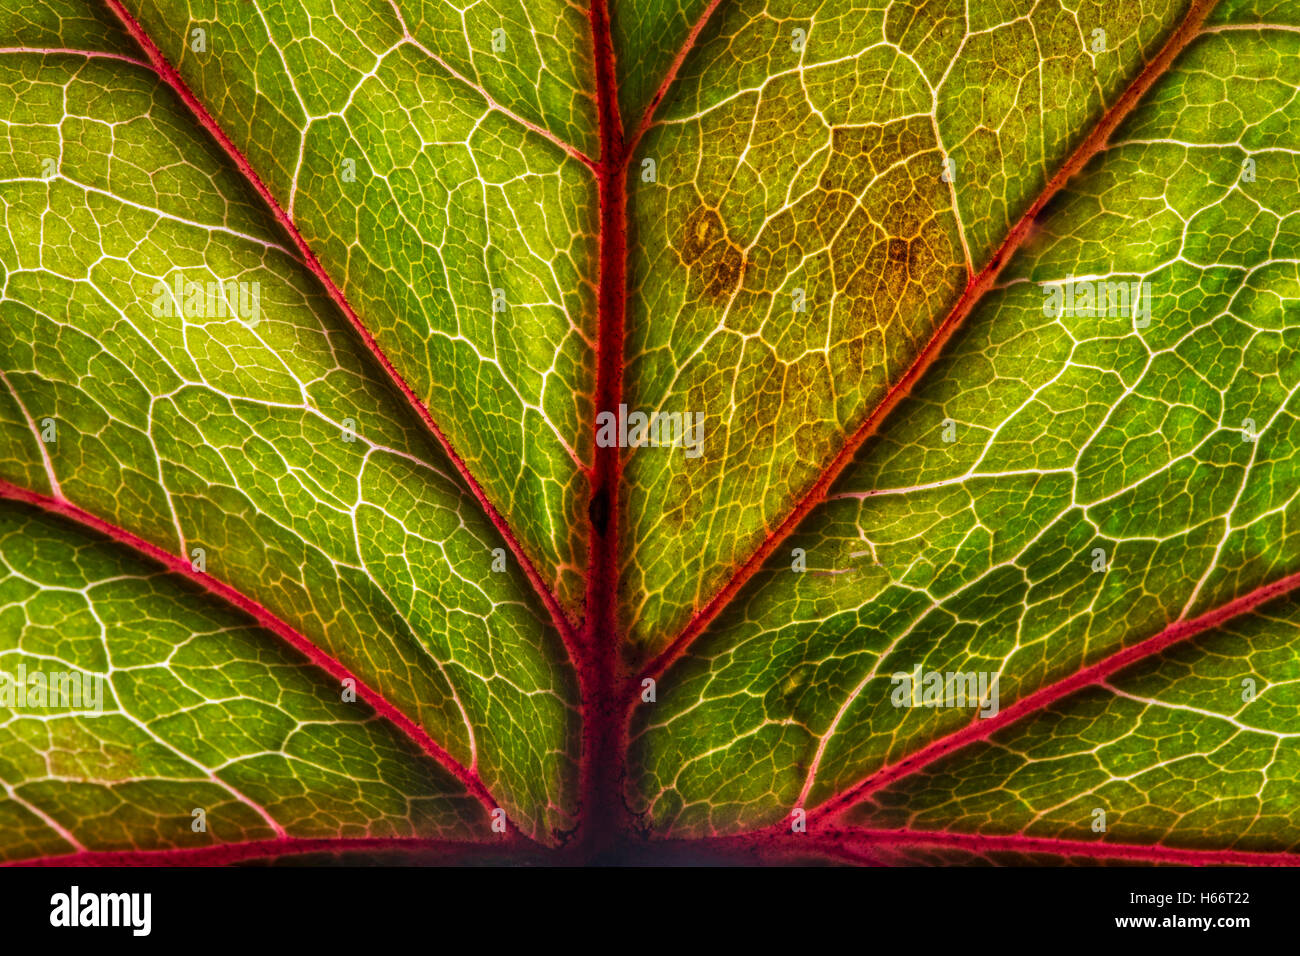 Backlit leaf showing the veins. Stock Photo